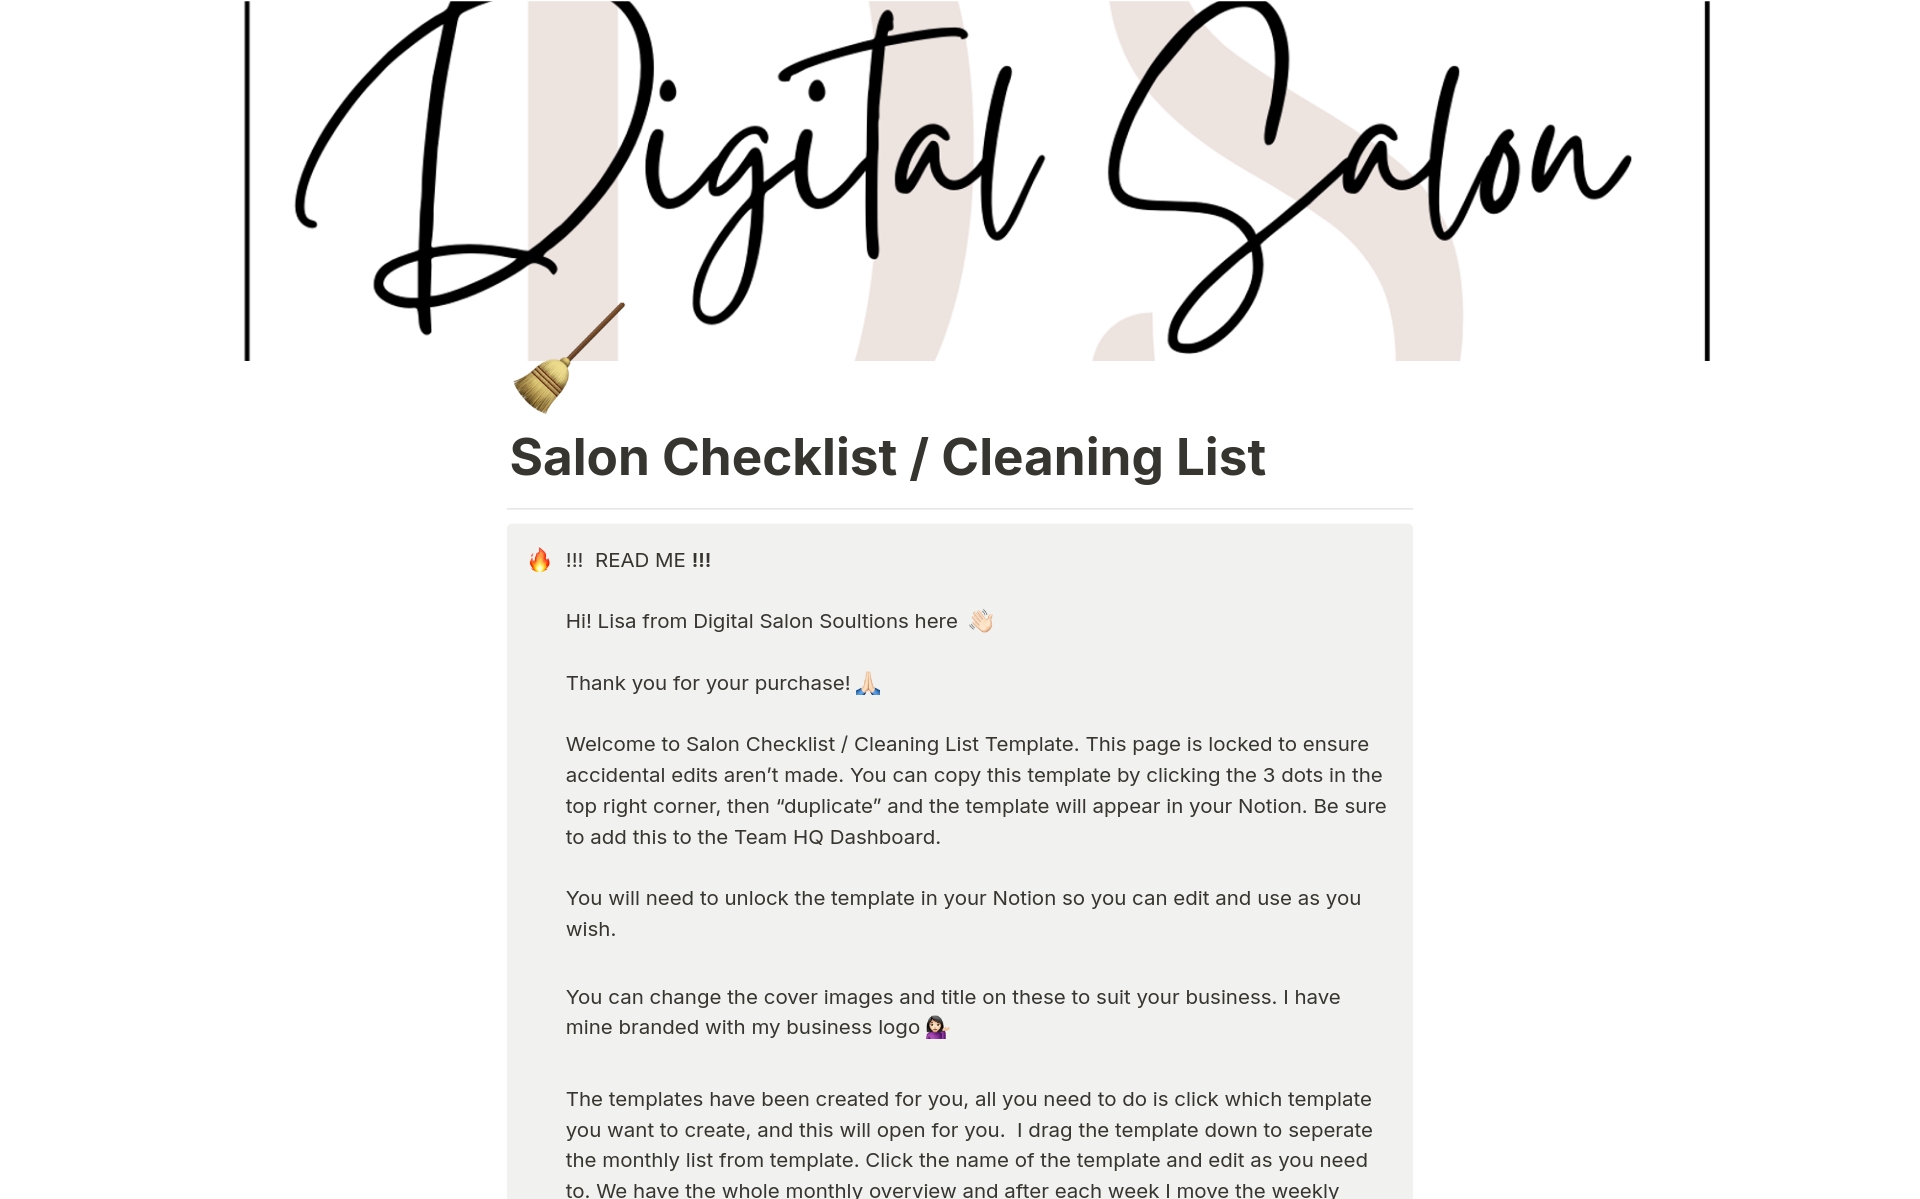 En forhåndsvisning av mal for Salon Checklist / Cleaning List